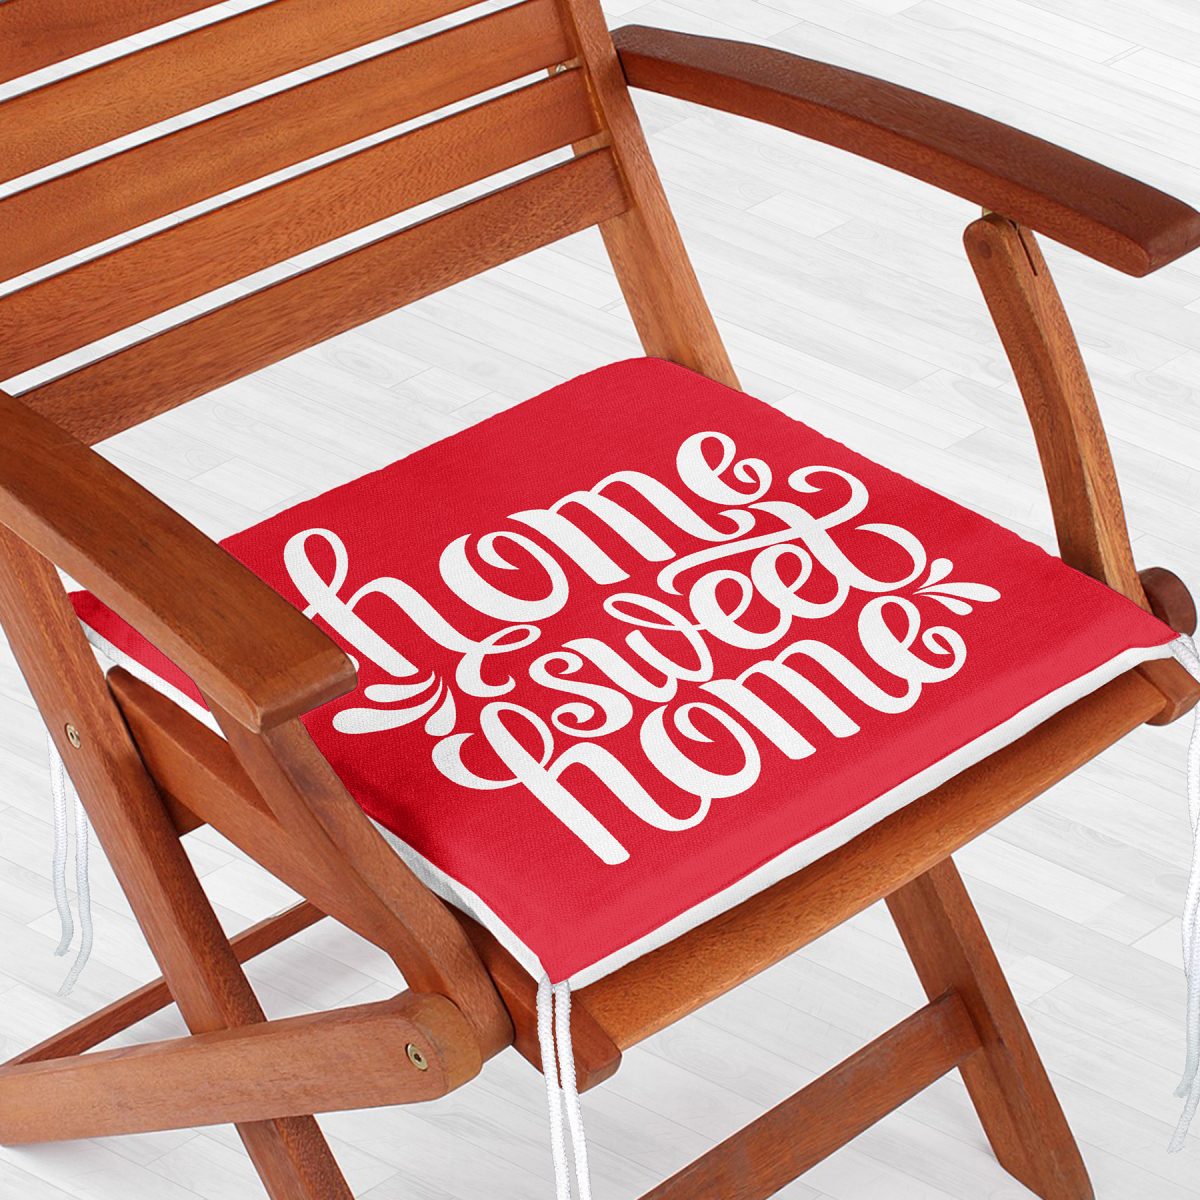 Home Sweet Home Dekorati Kare Sandalye Minderi 40x40cm ermuarlı Realhomes